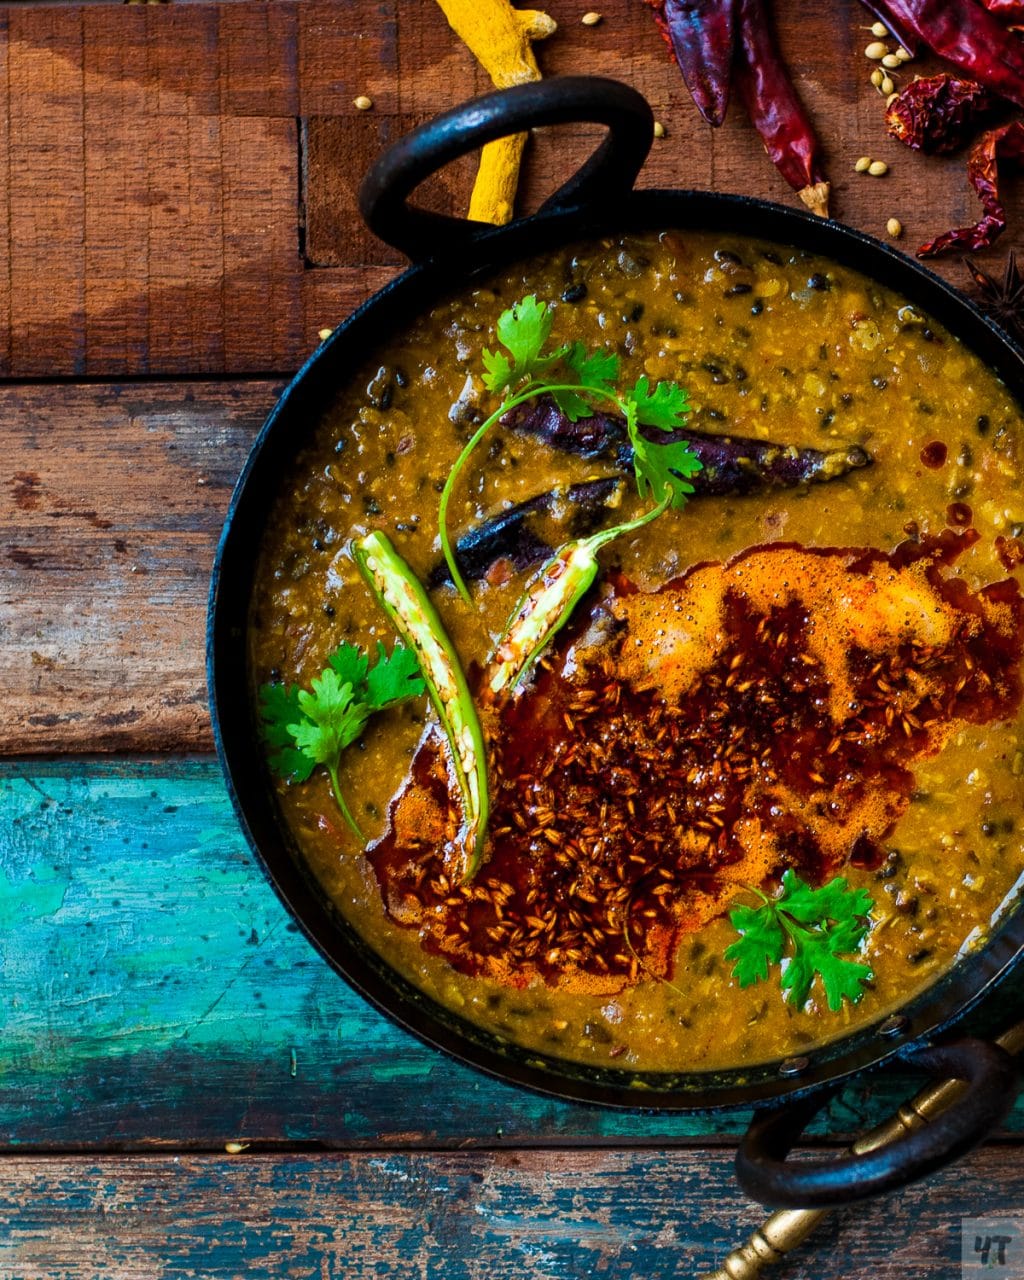 Punjabi Langarwali Dal - Homestyle Dal made with split urad and channa dal using pressure cooker or Instant Pot.Vegetarian Quick lentil recipe. #dal #lentil #langarwalidal #dalrecipe #indiandal #punjabi #vegetarian #recipe #indian#instantpot #pressurecooker